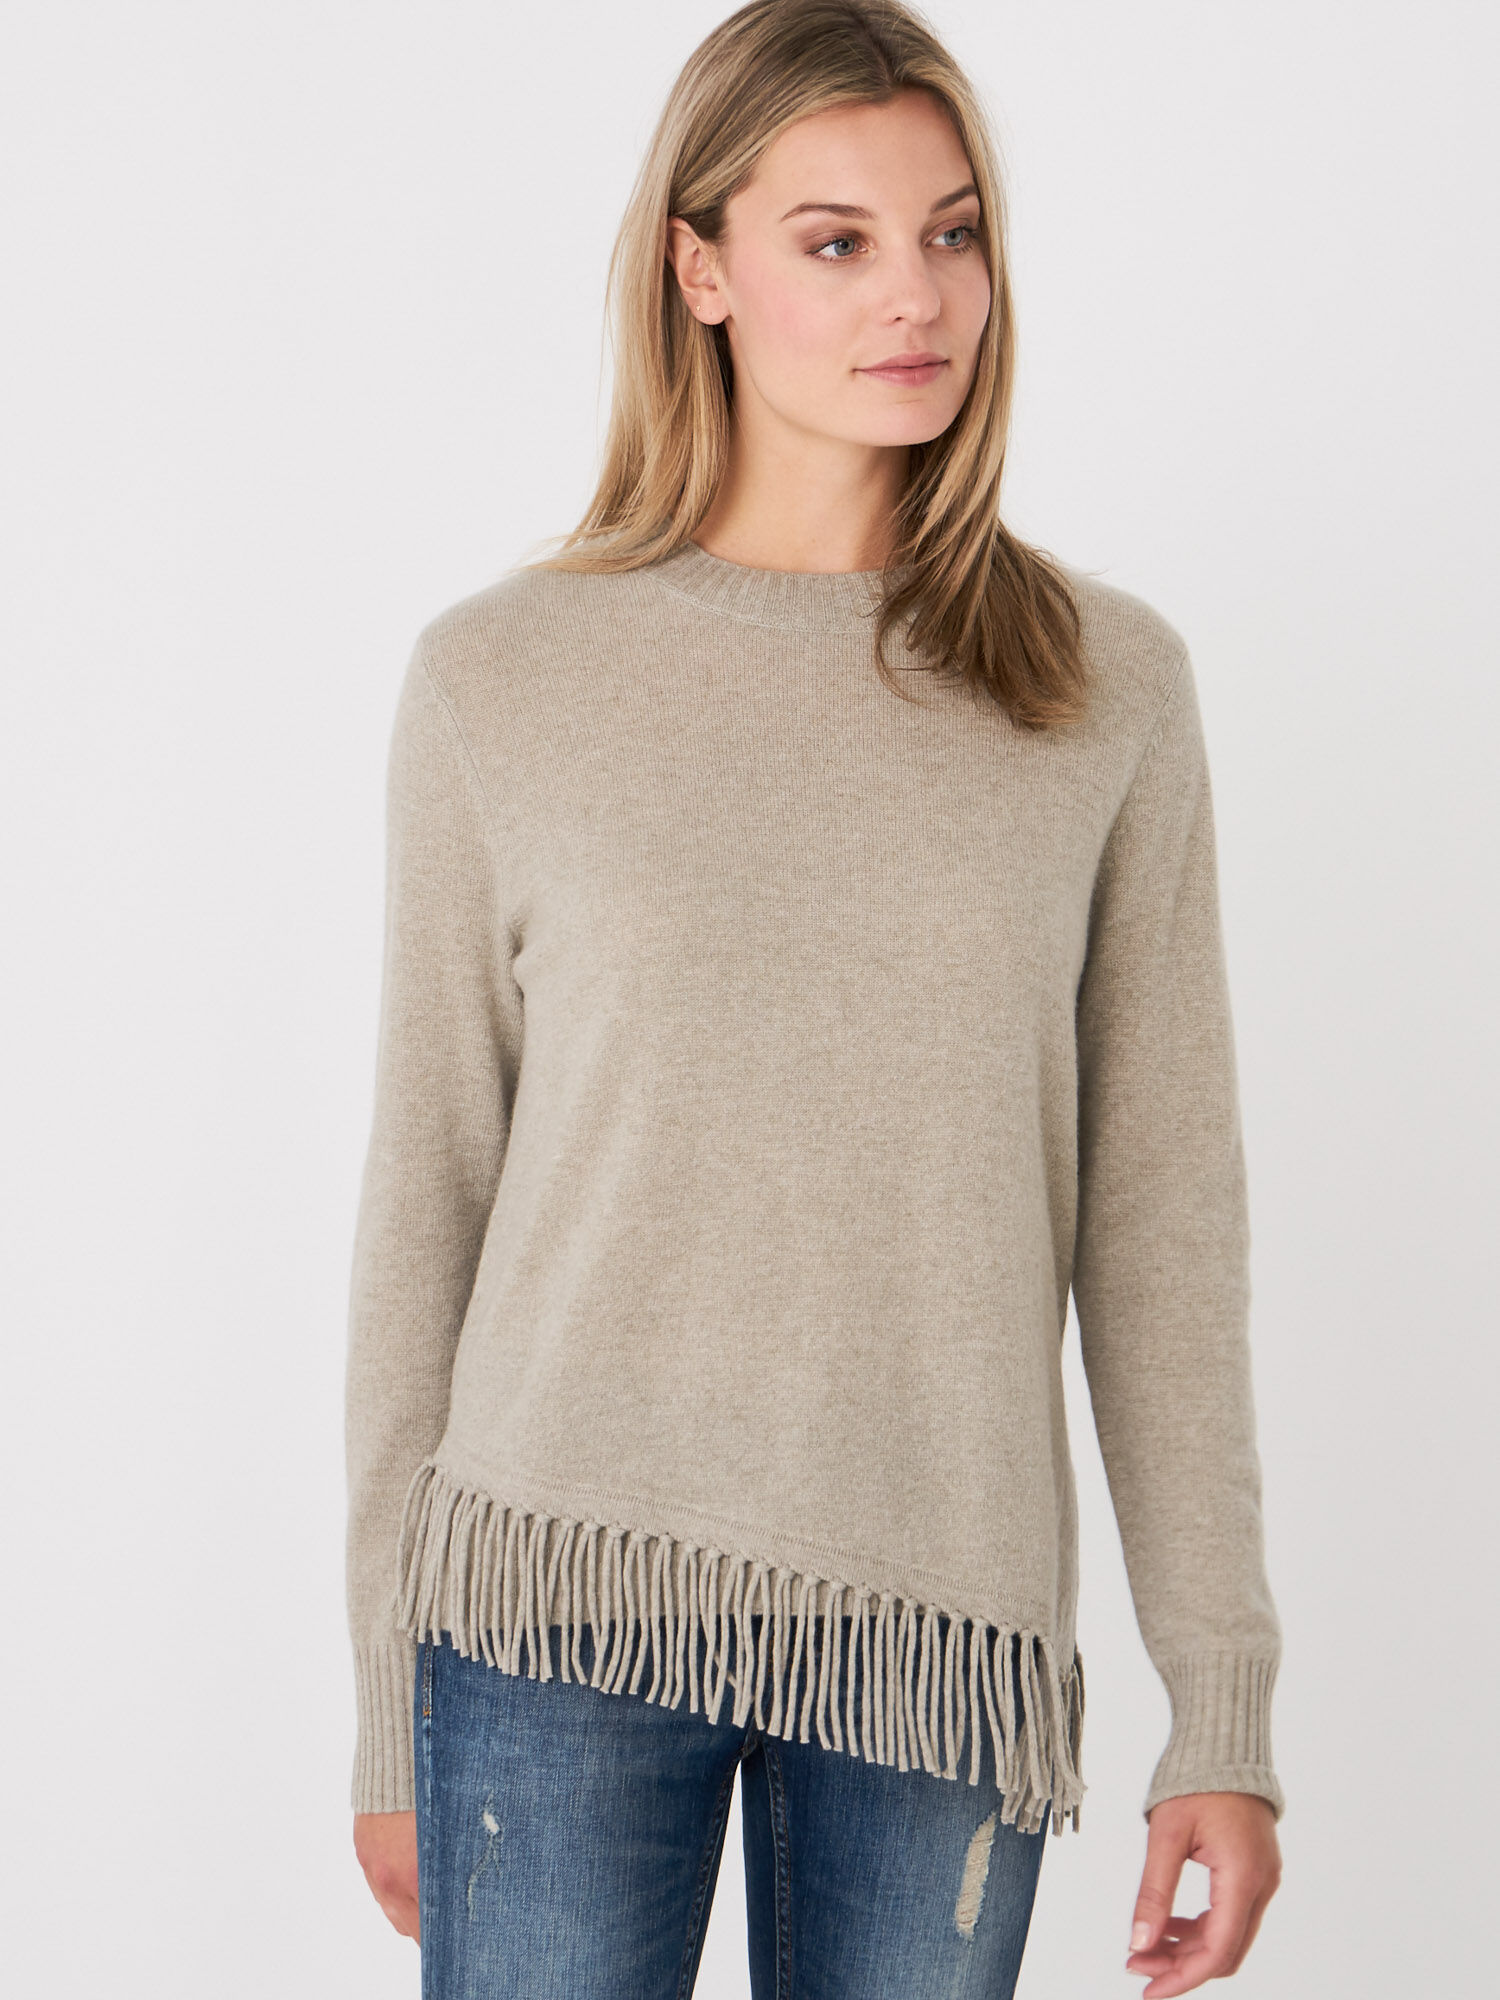 Organic cashmere sweater with diagonal fringed hem